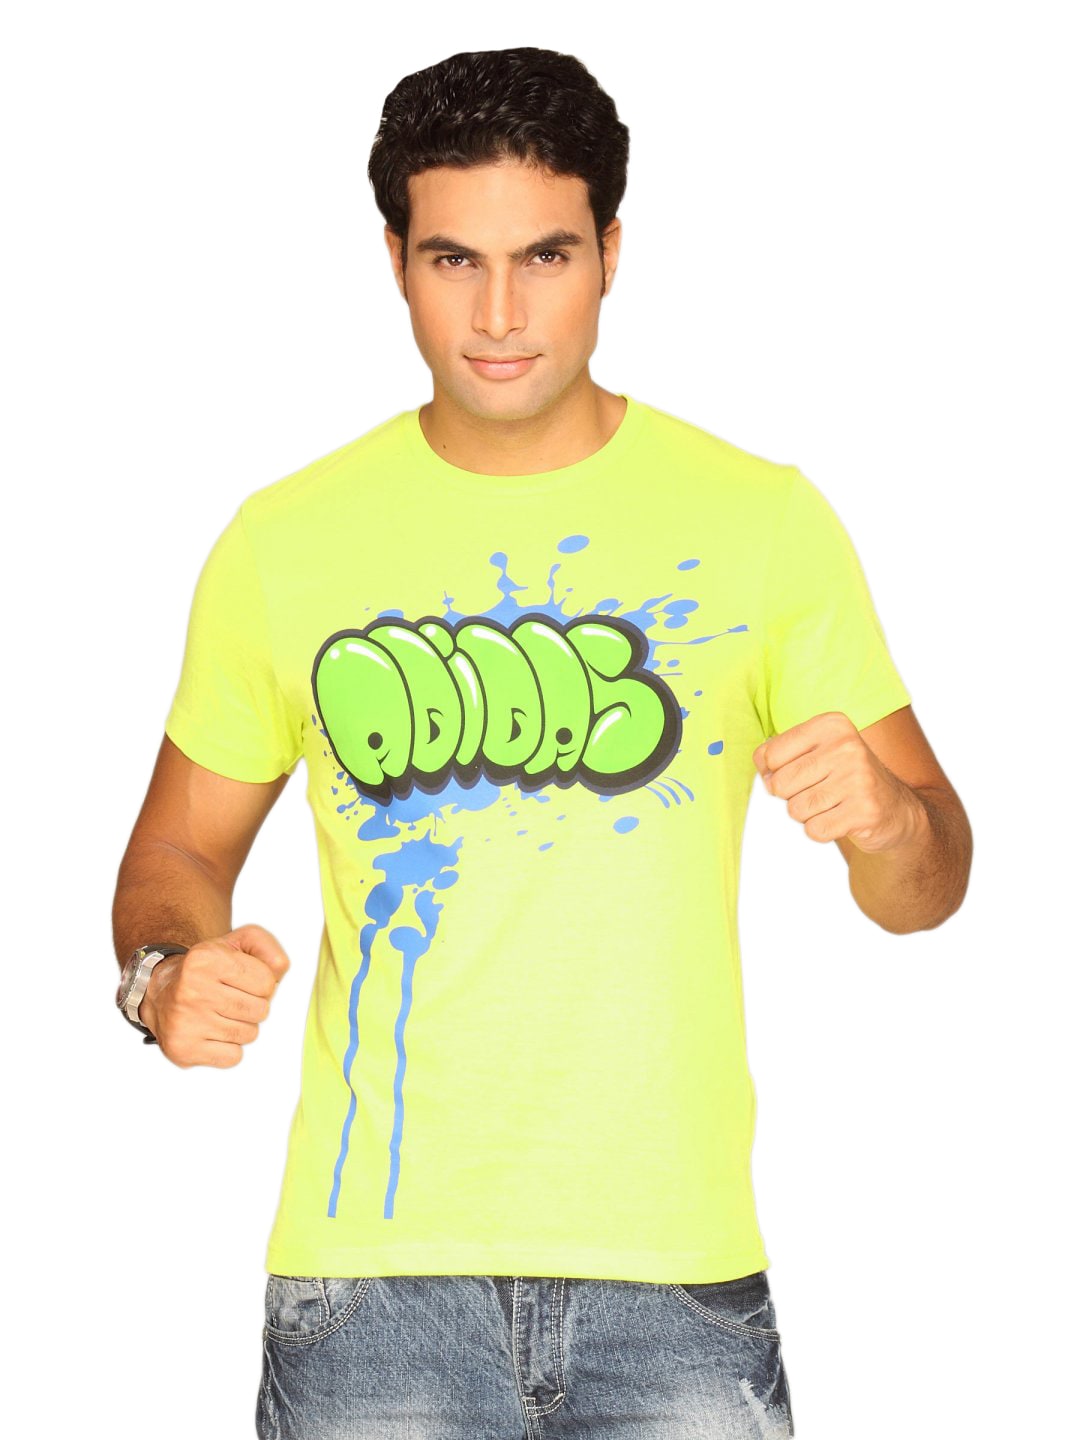 ADIDAS Men's Bubble Green T-shirt